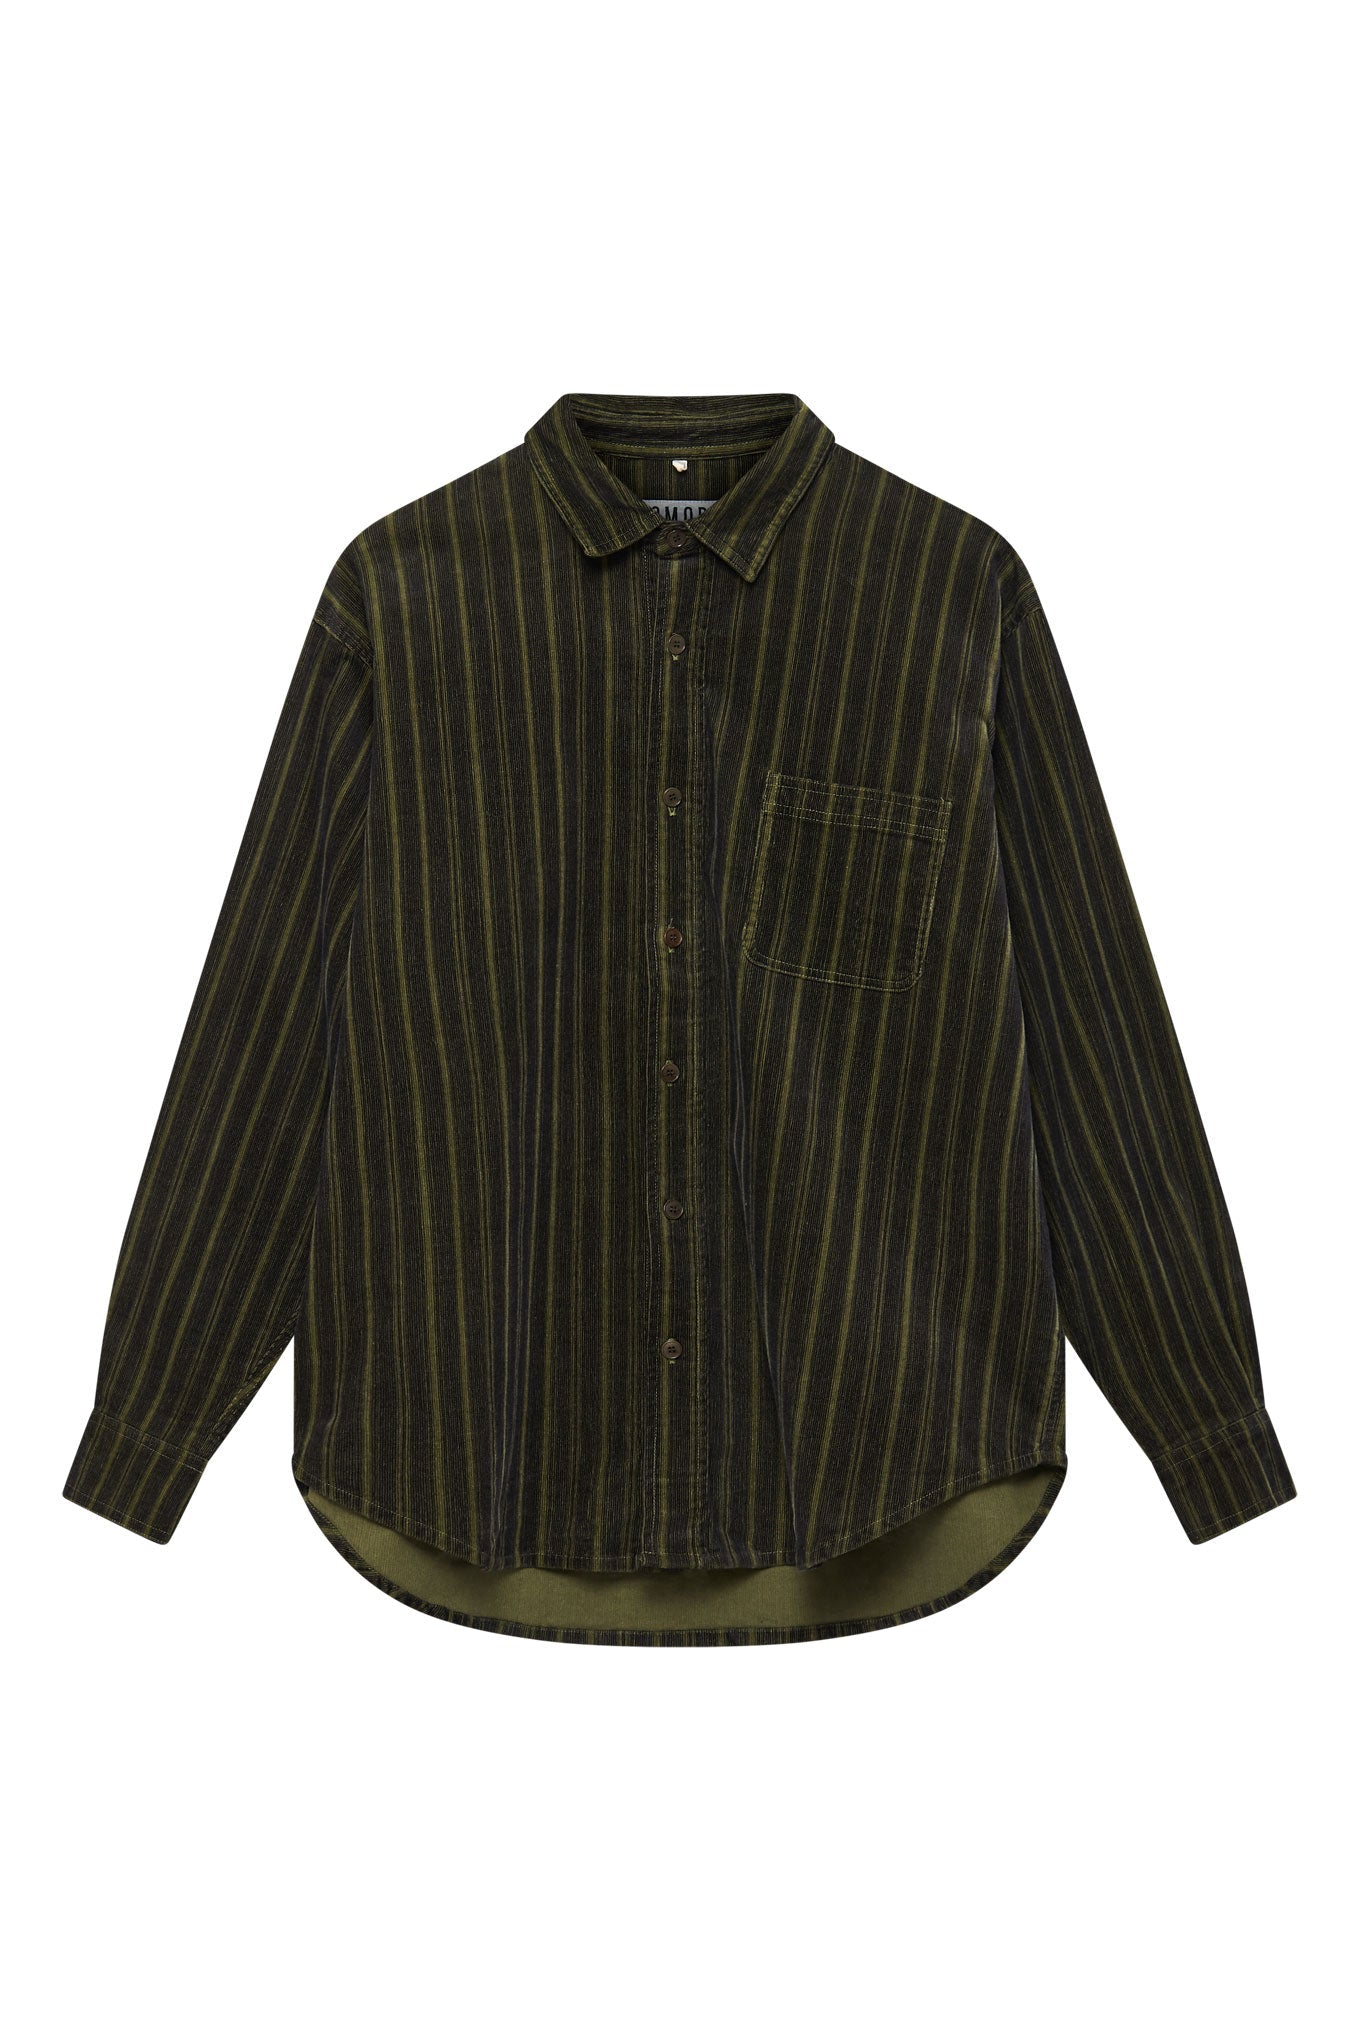 Dark green, striped corduroy shirt JAX made from 100% organic cotton by Komodo